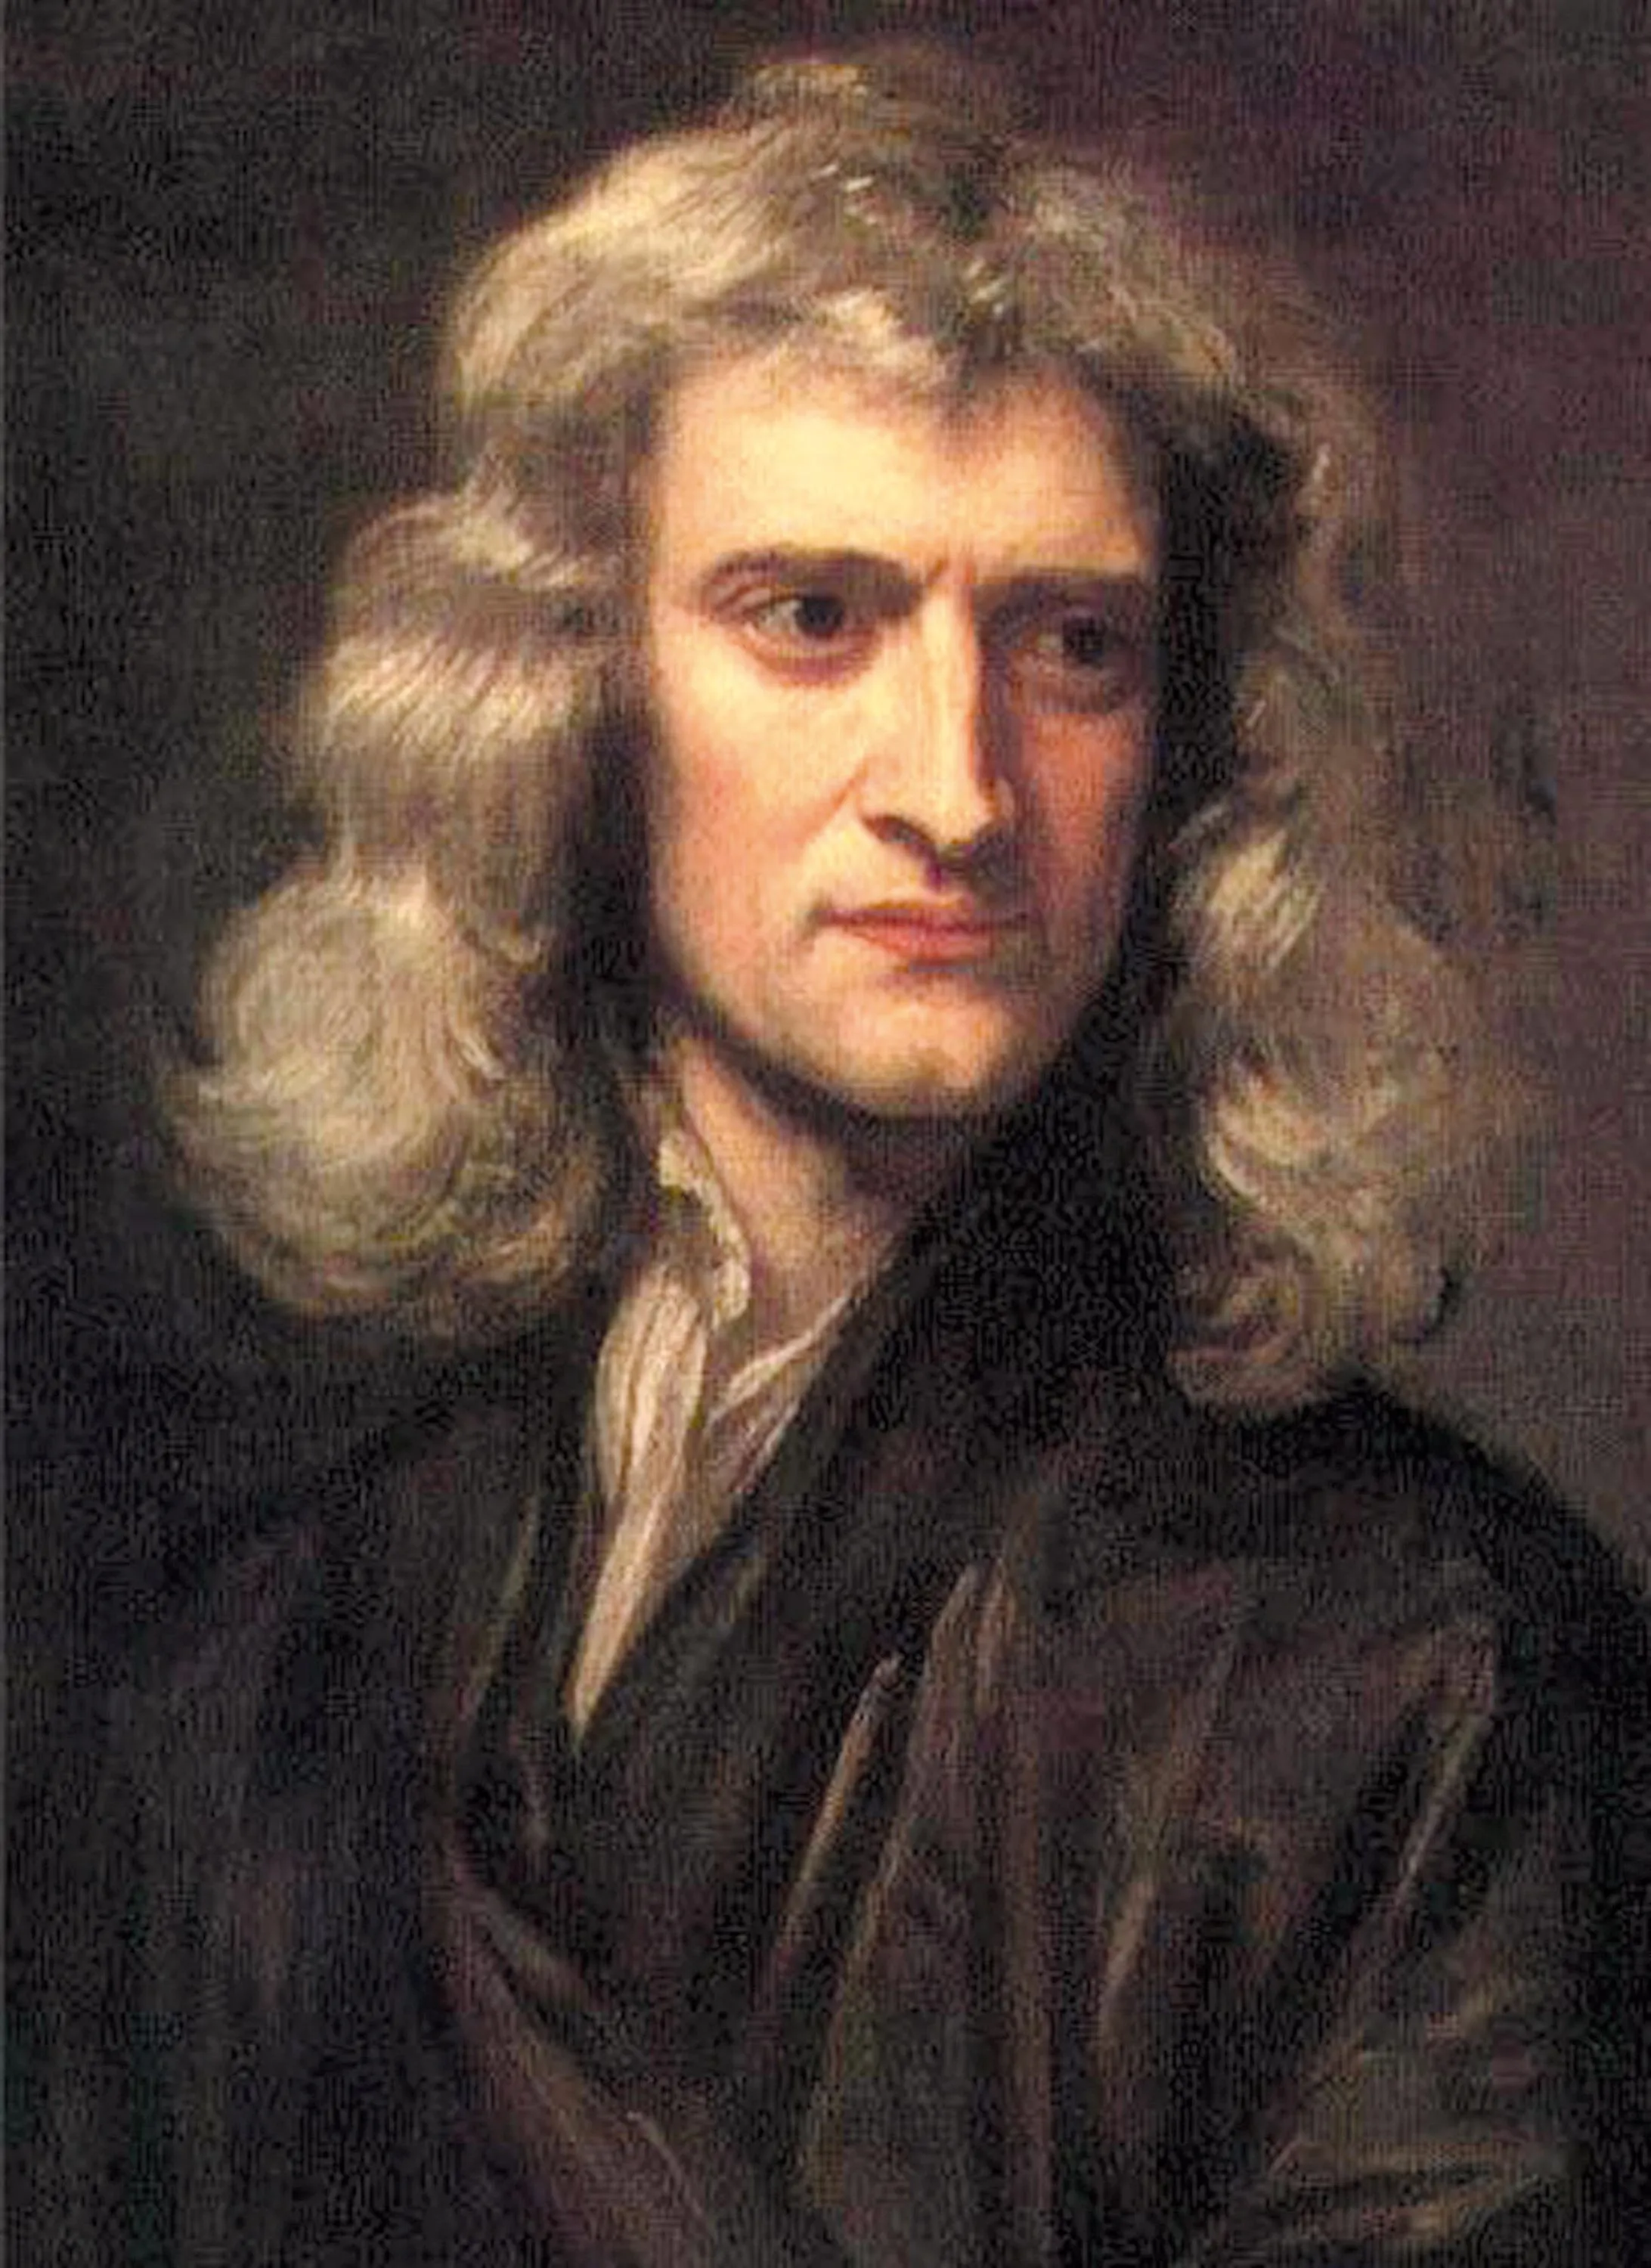 Doc. 1 : Les apports scientifiques d'Isaac Newton (1642-1727).